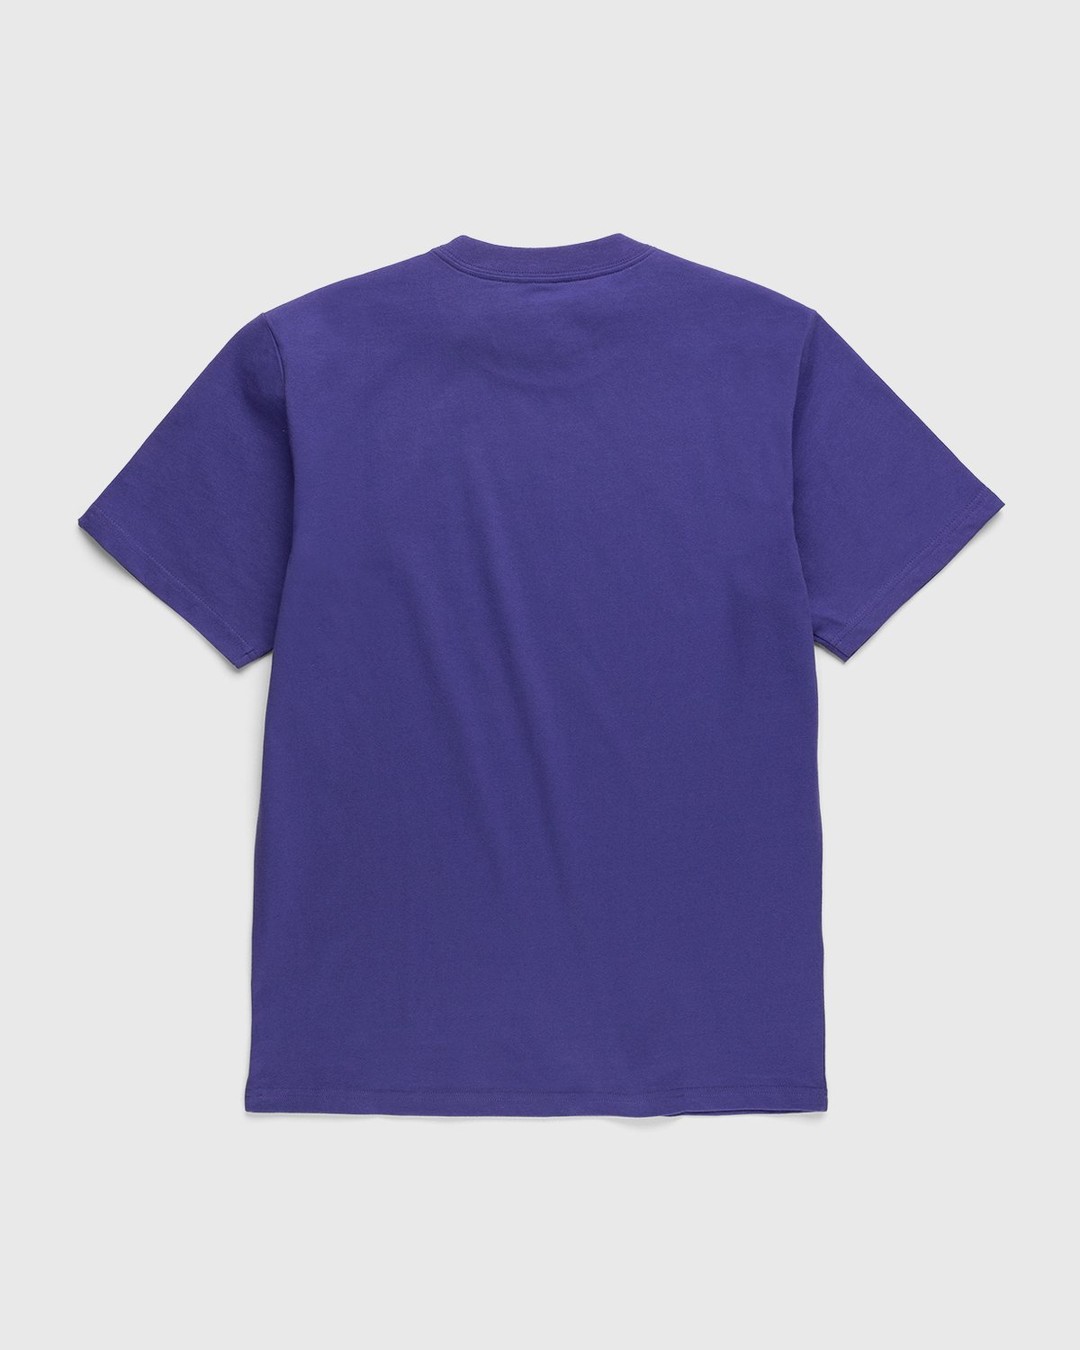 Carhartt WIP – University Script T-Shirt Razzmic White - T-Shirts - Purple - Image 2